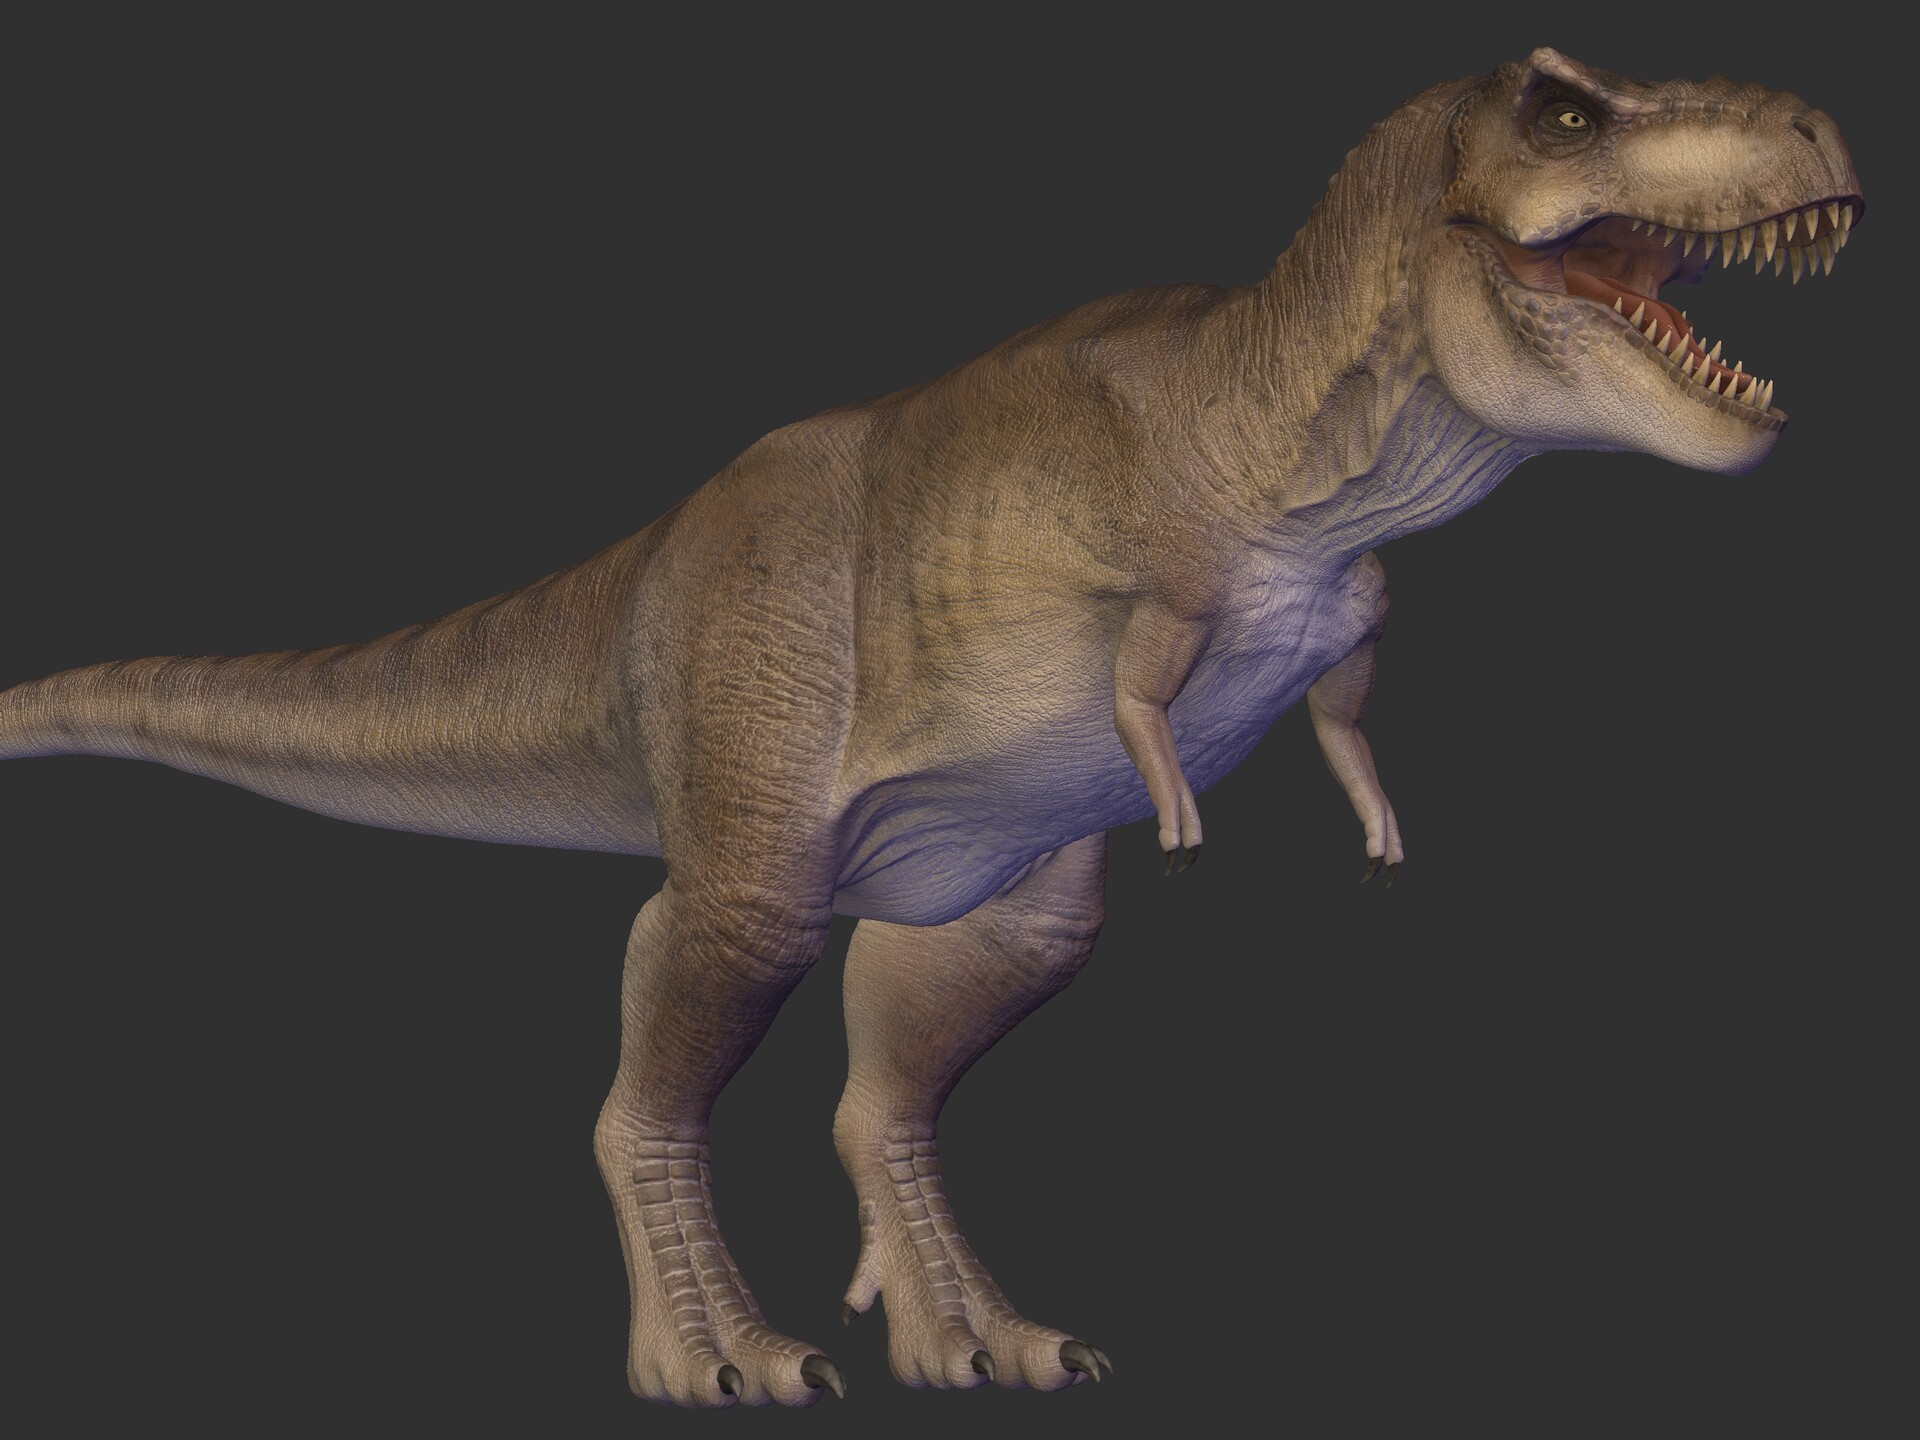 David Rosa rex rexy from Jurassic park and world (Fanart)